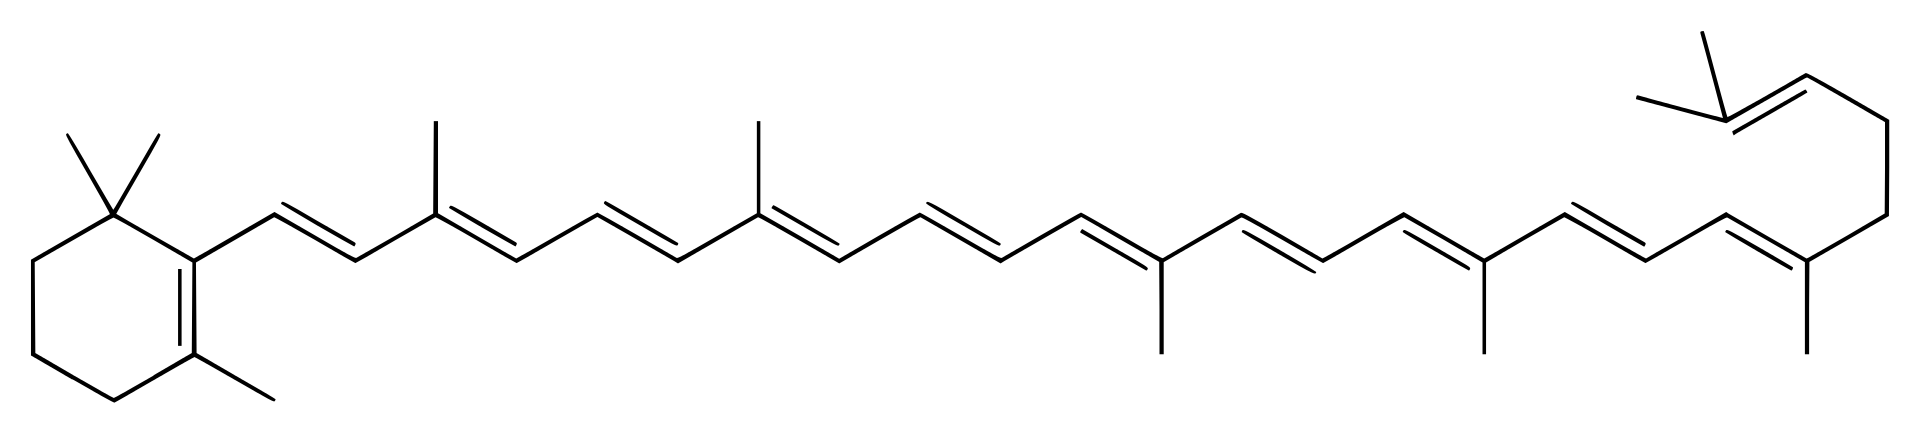 Structure of γ-carotene